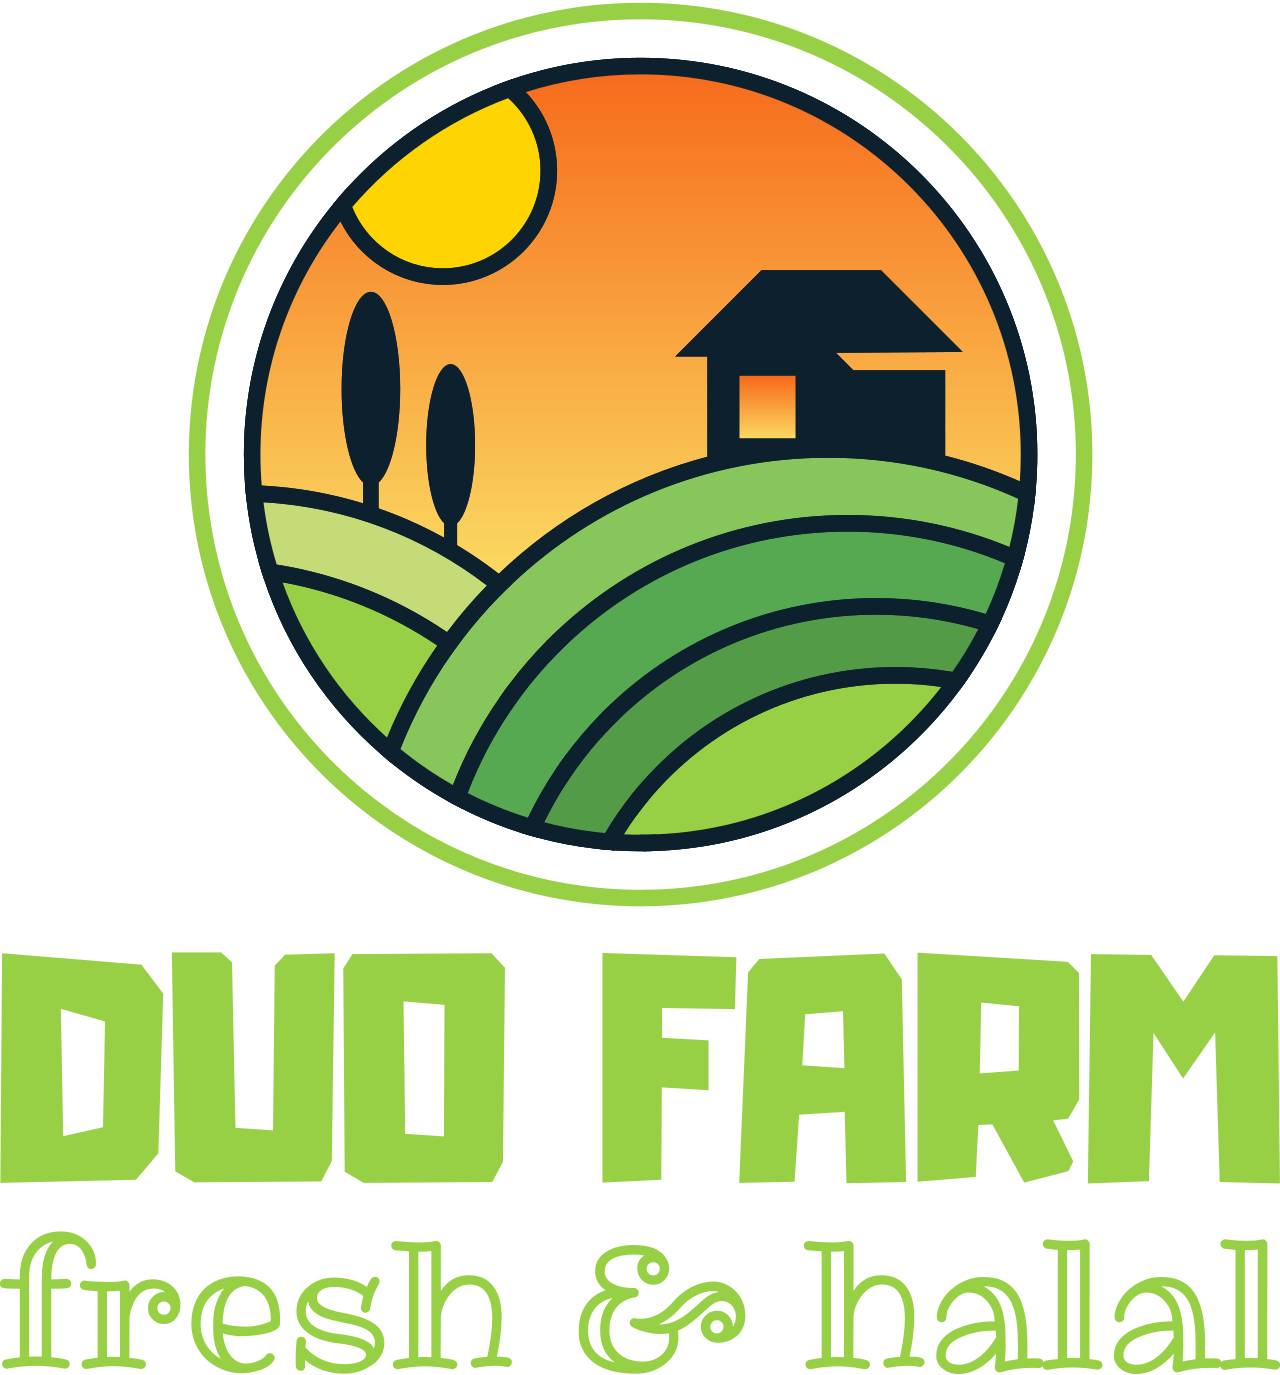 DUO FARM's web page